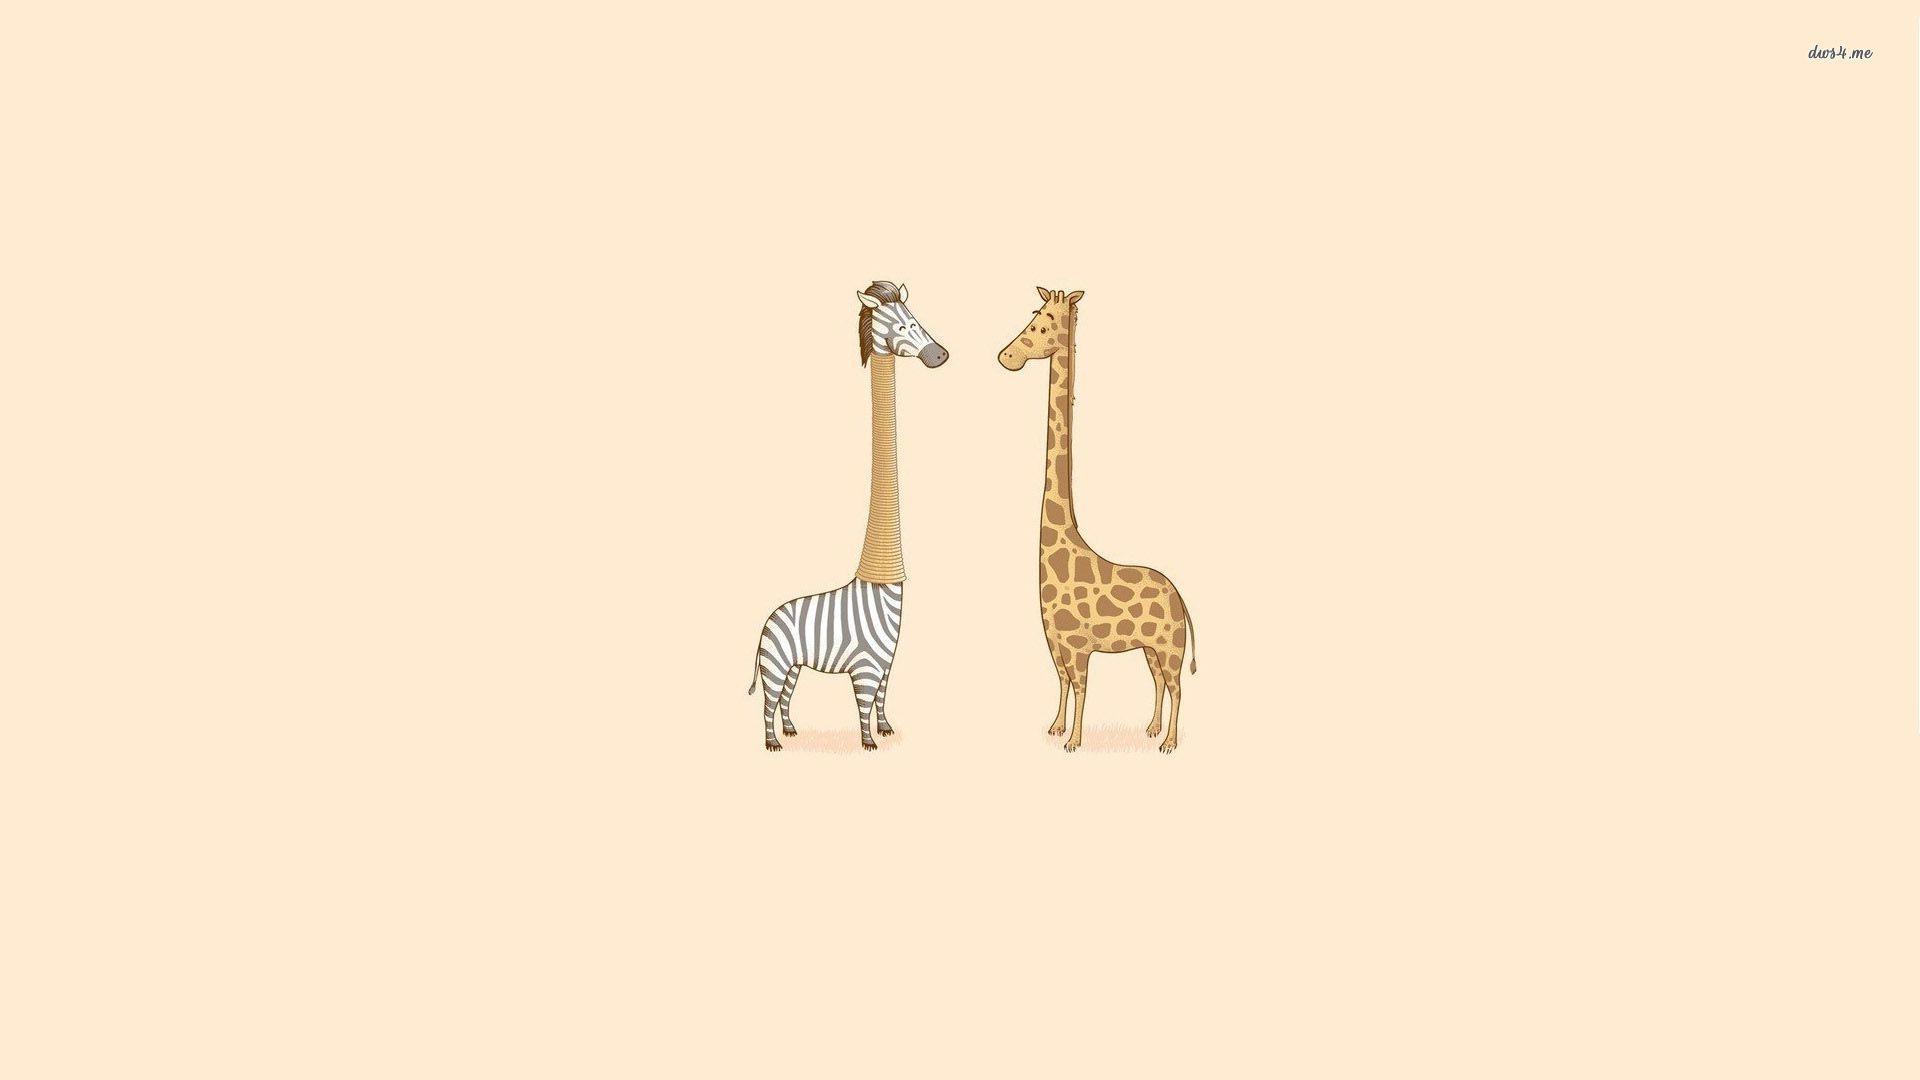 Long neck zebra and a giraffe wallpaper - Funny wallpapers - #30713